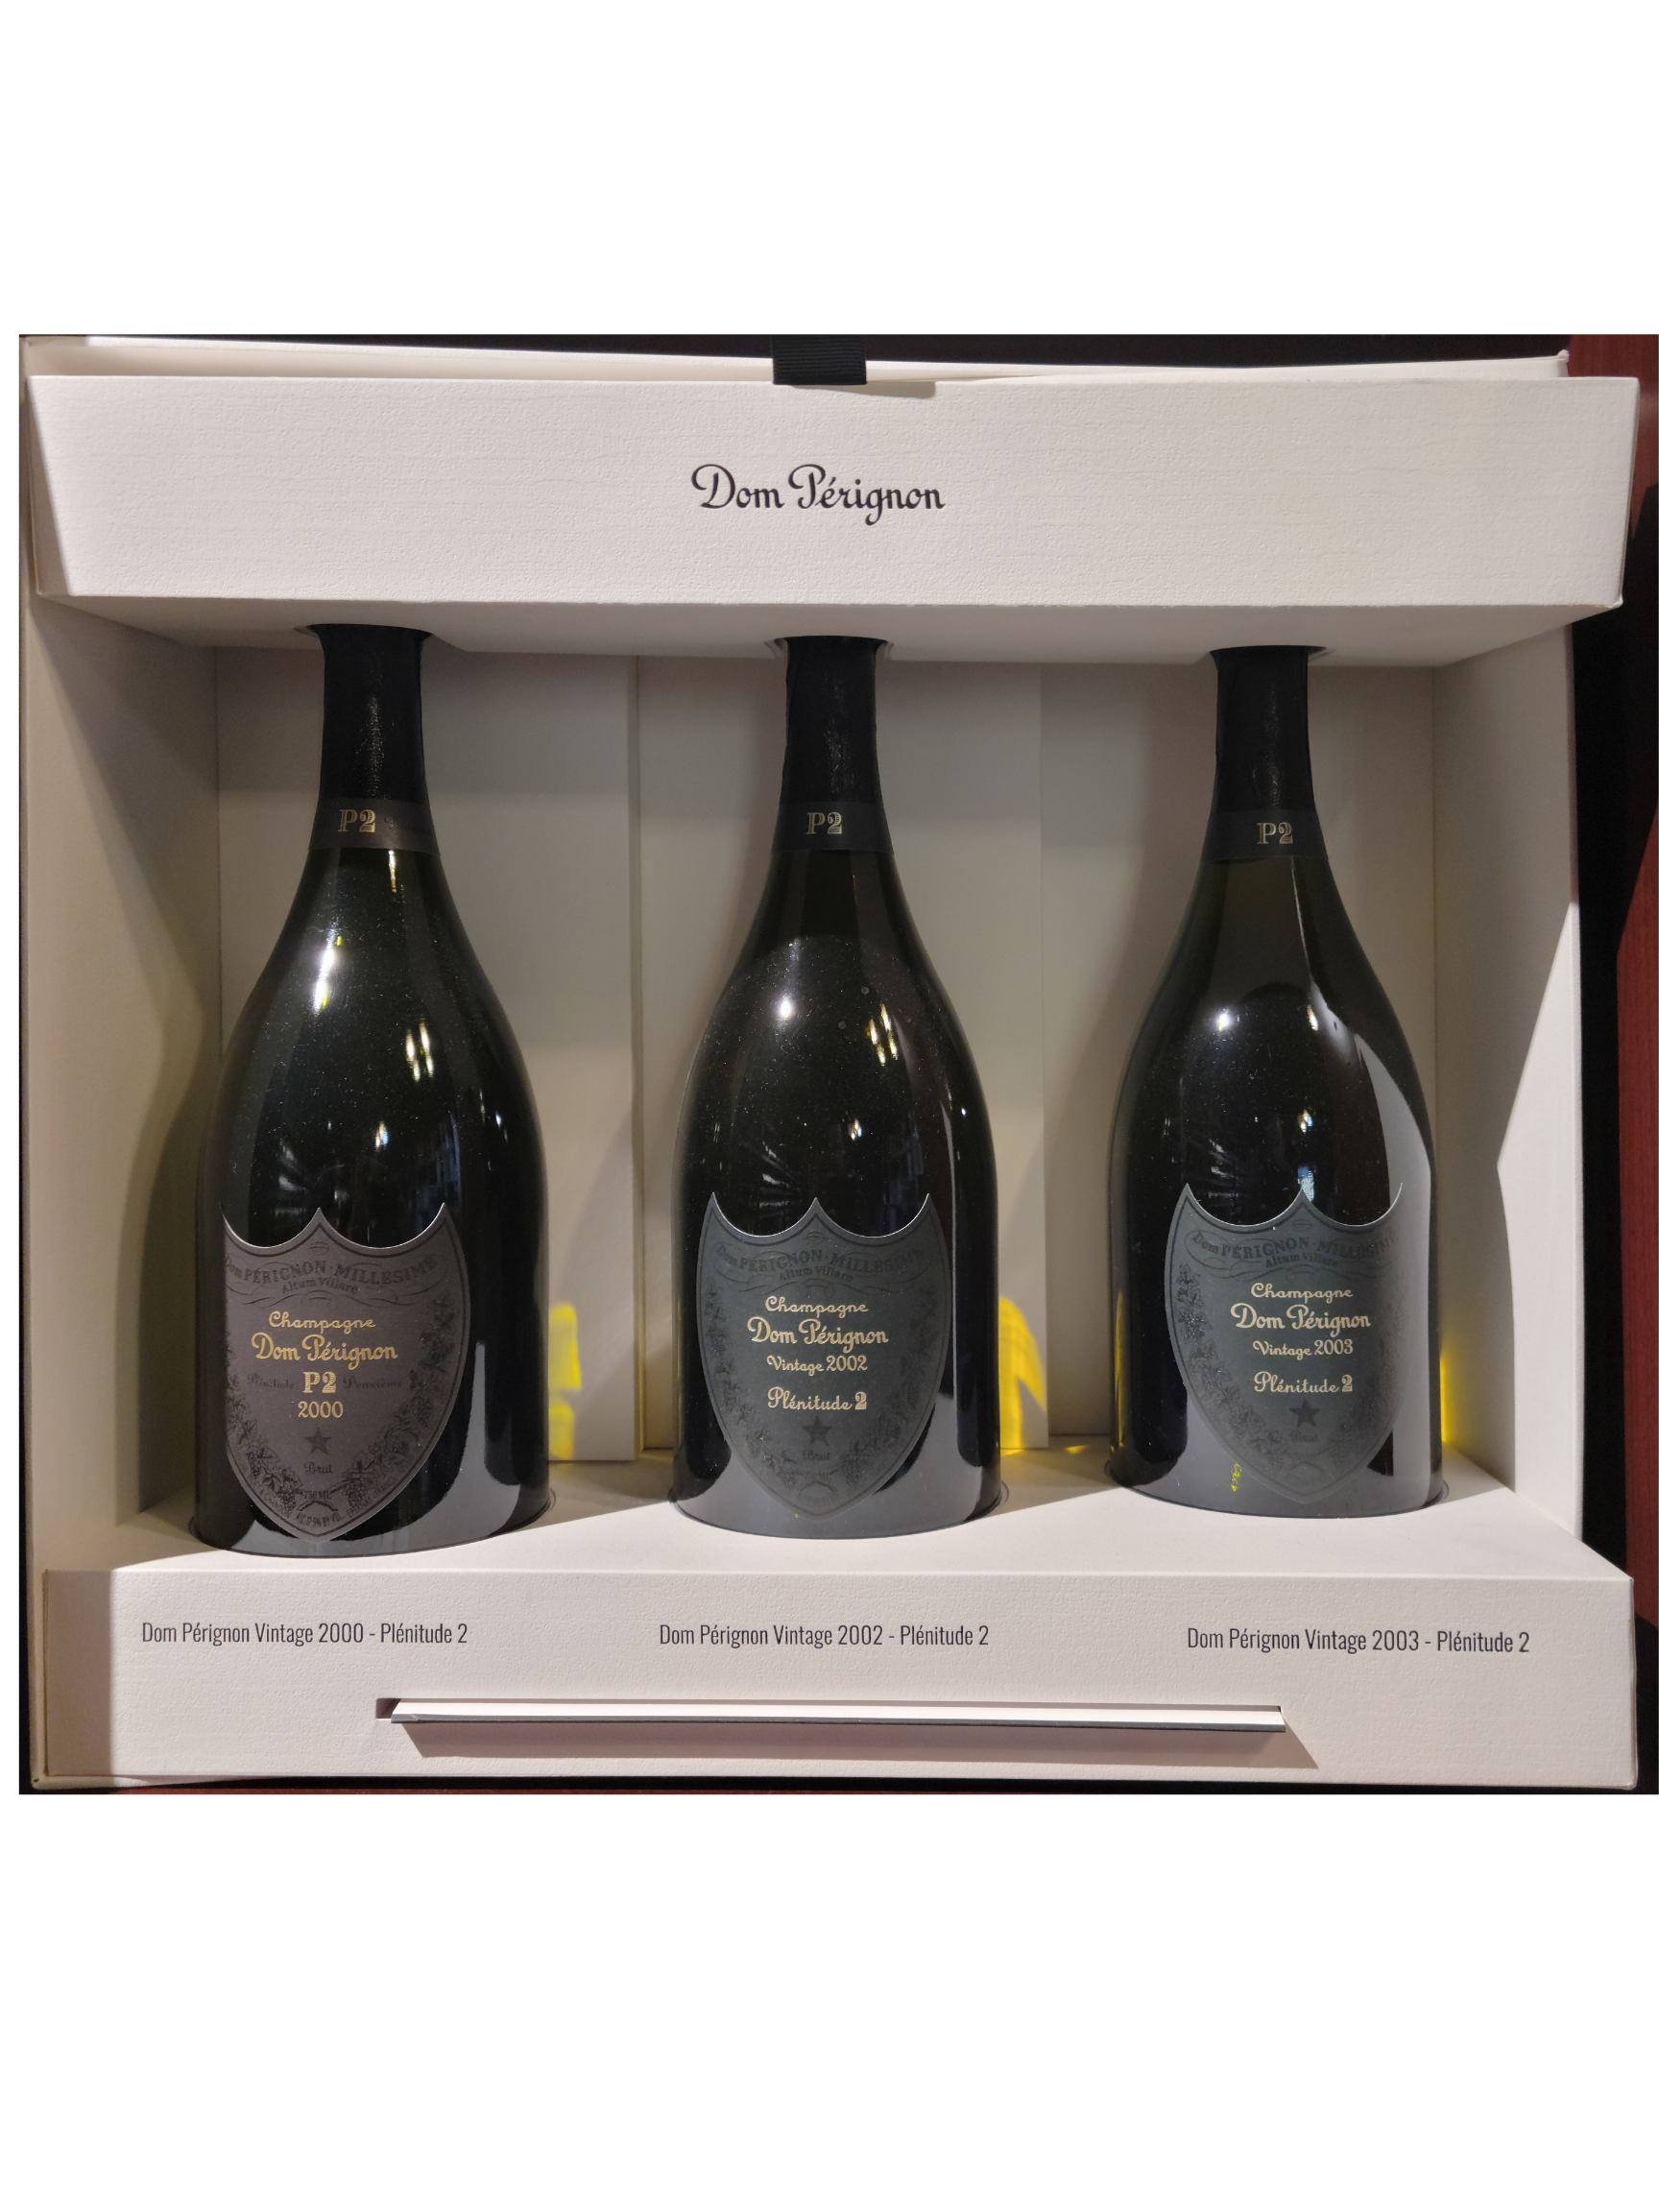 Dom Perignon Champagne Brut P2 Vertical Pack (99/02/03) France 750ml